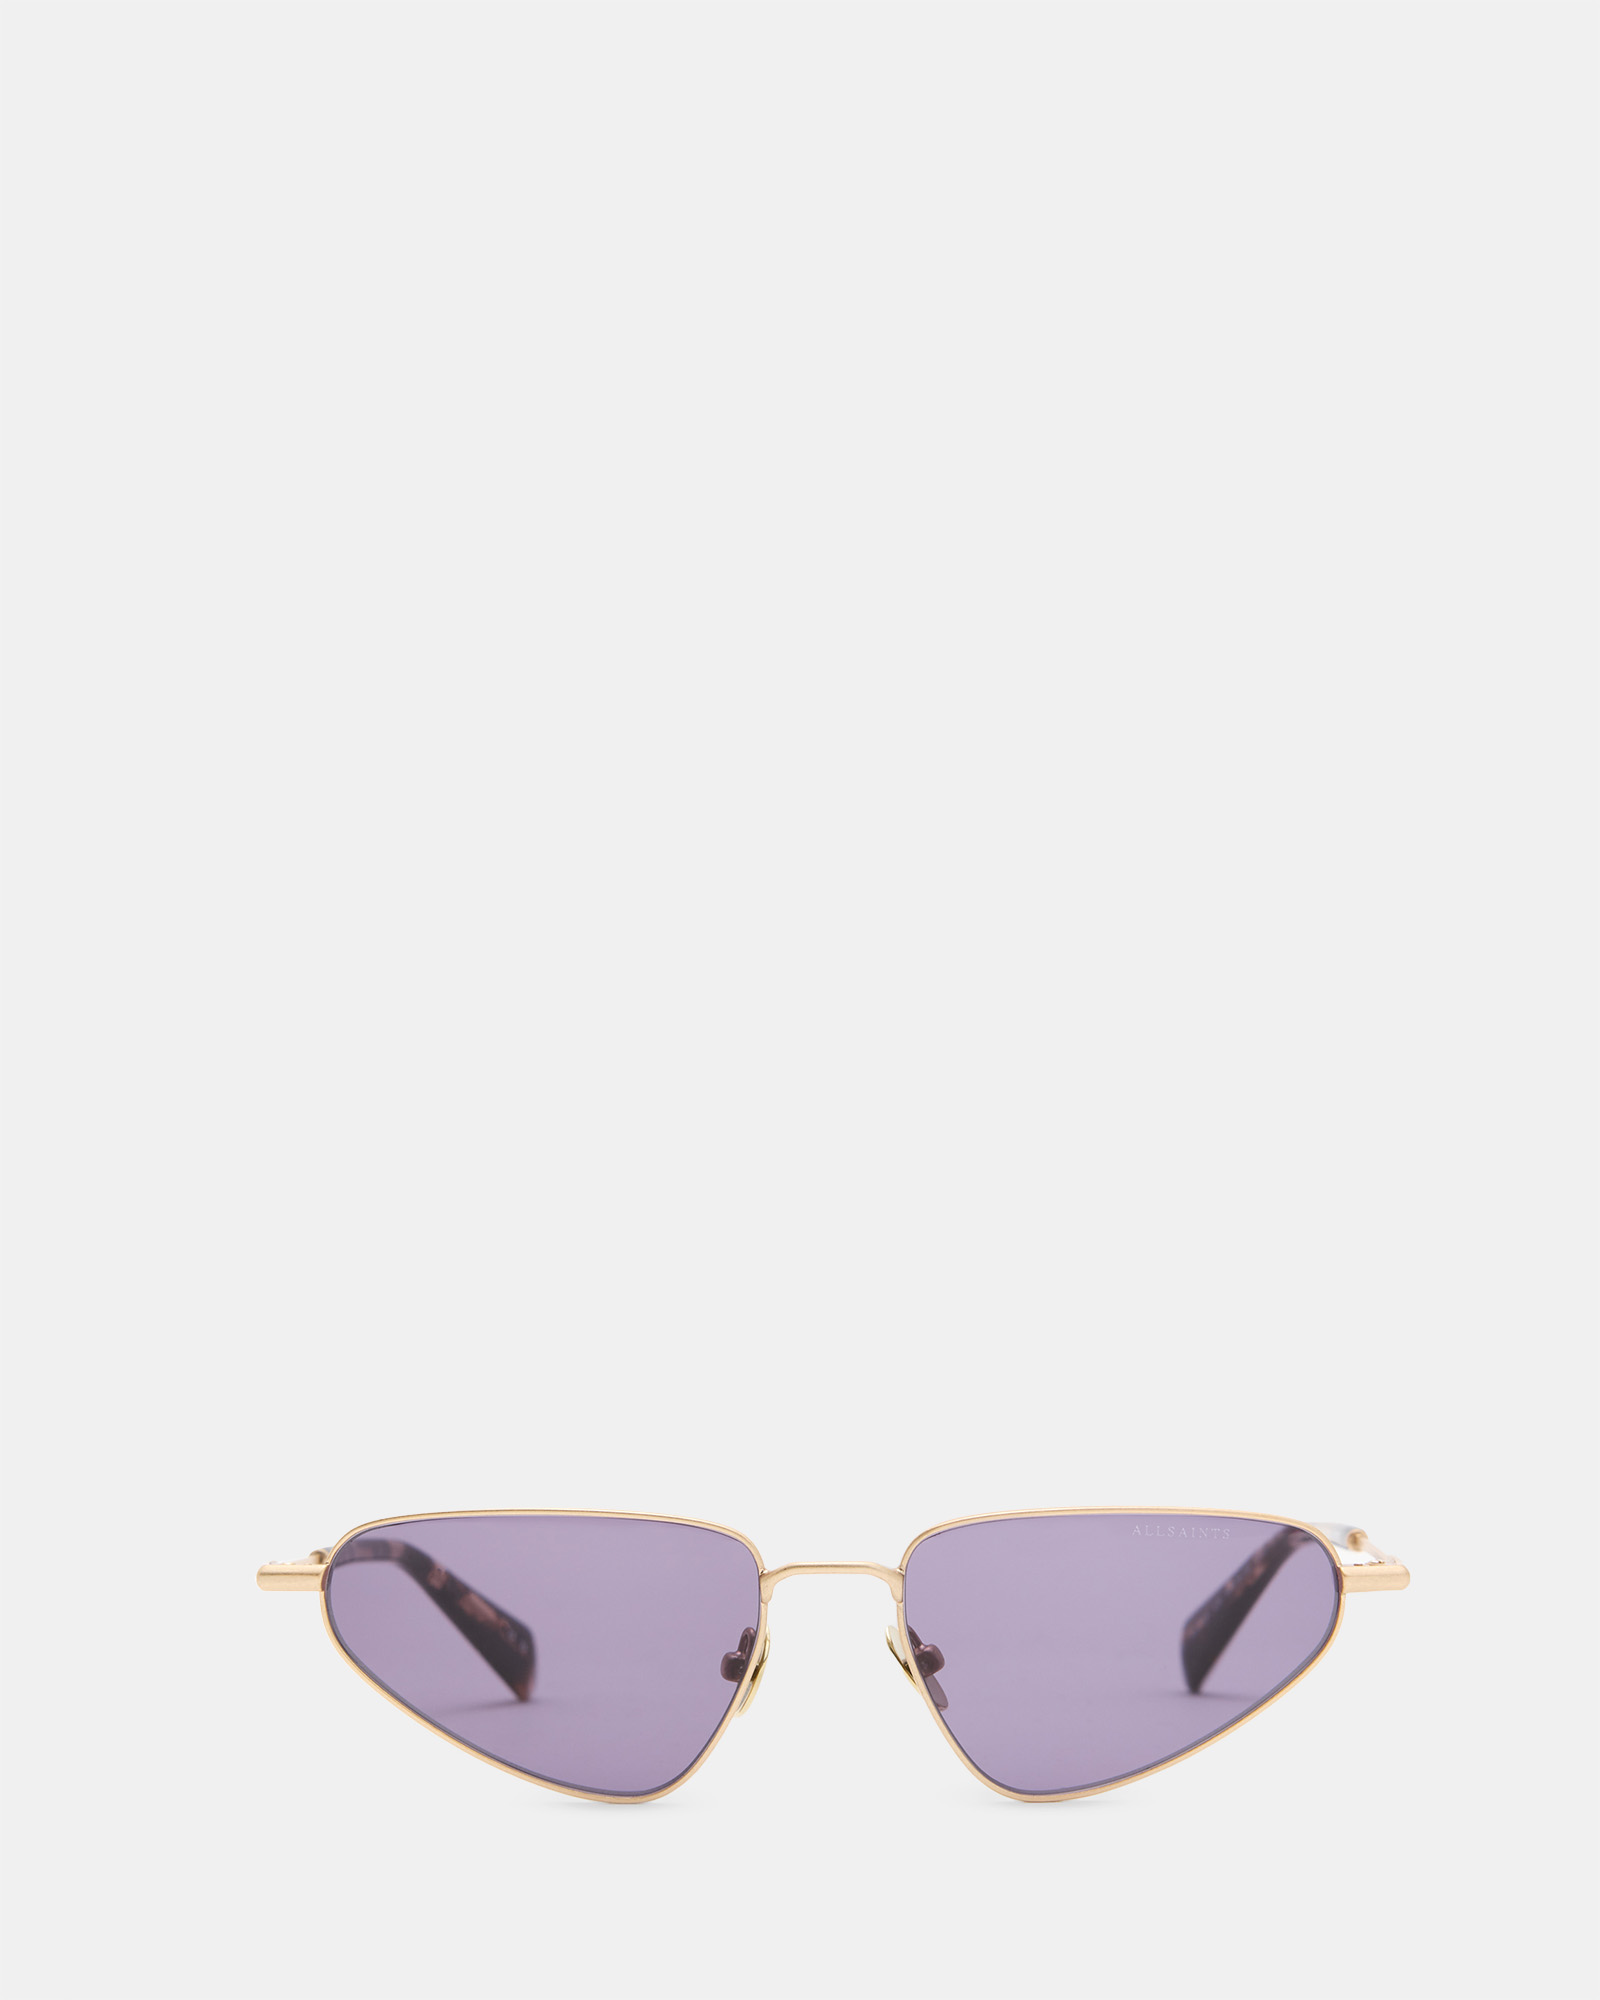 AllSaints Trinity Cat Eye Sunglasses,, GOLD/TORT